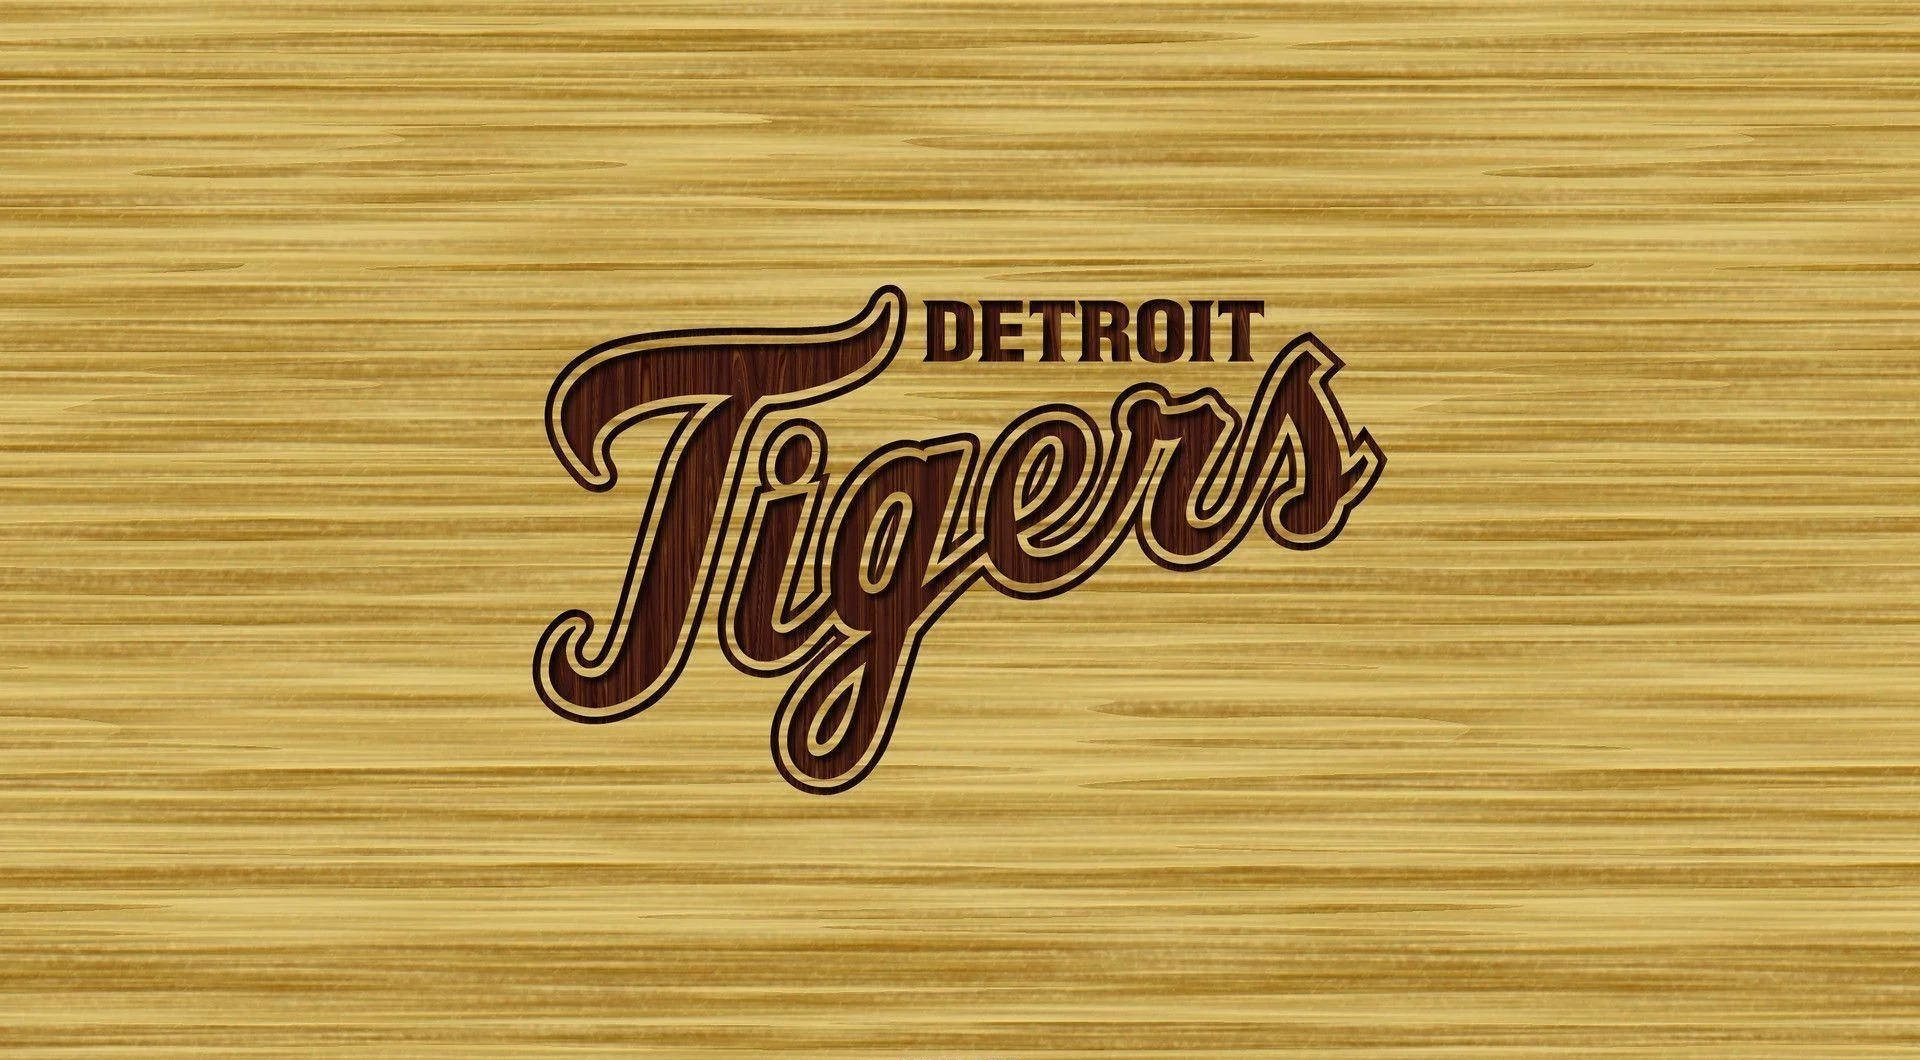 Detroit Tigers Pictures